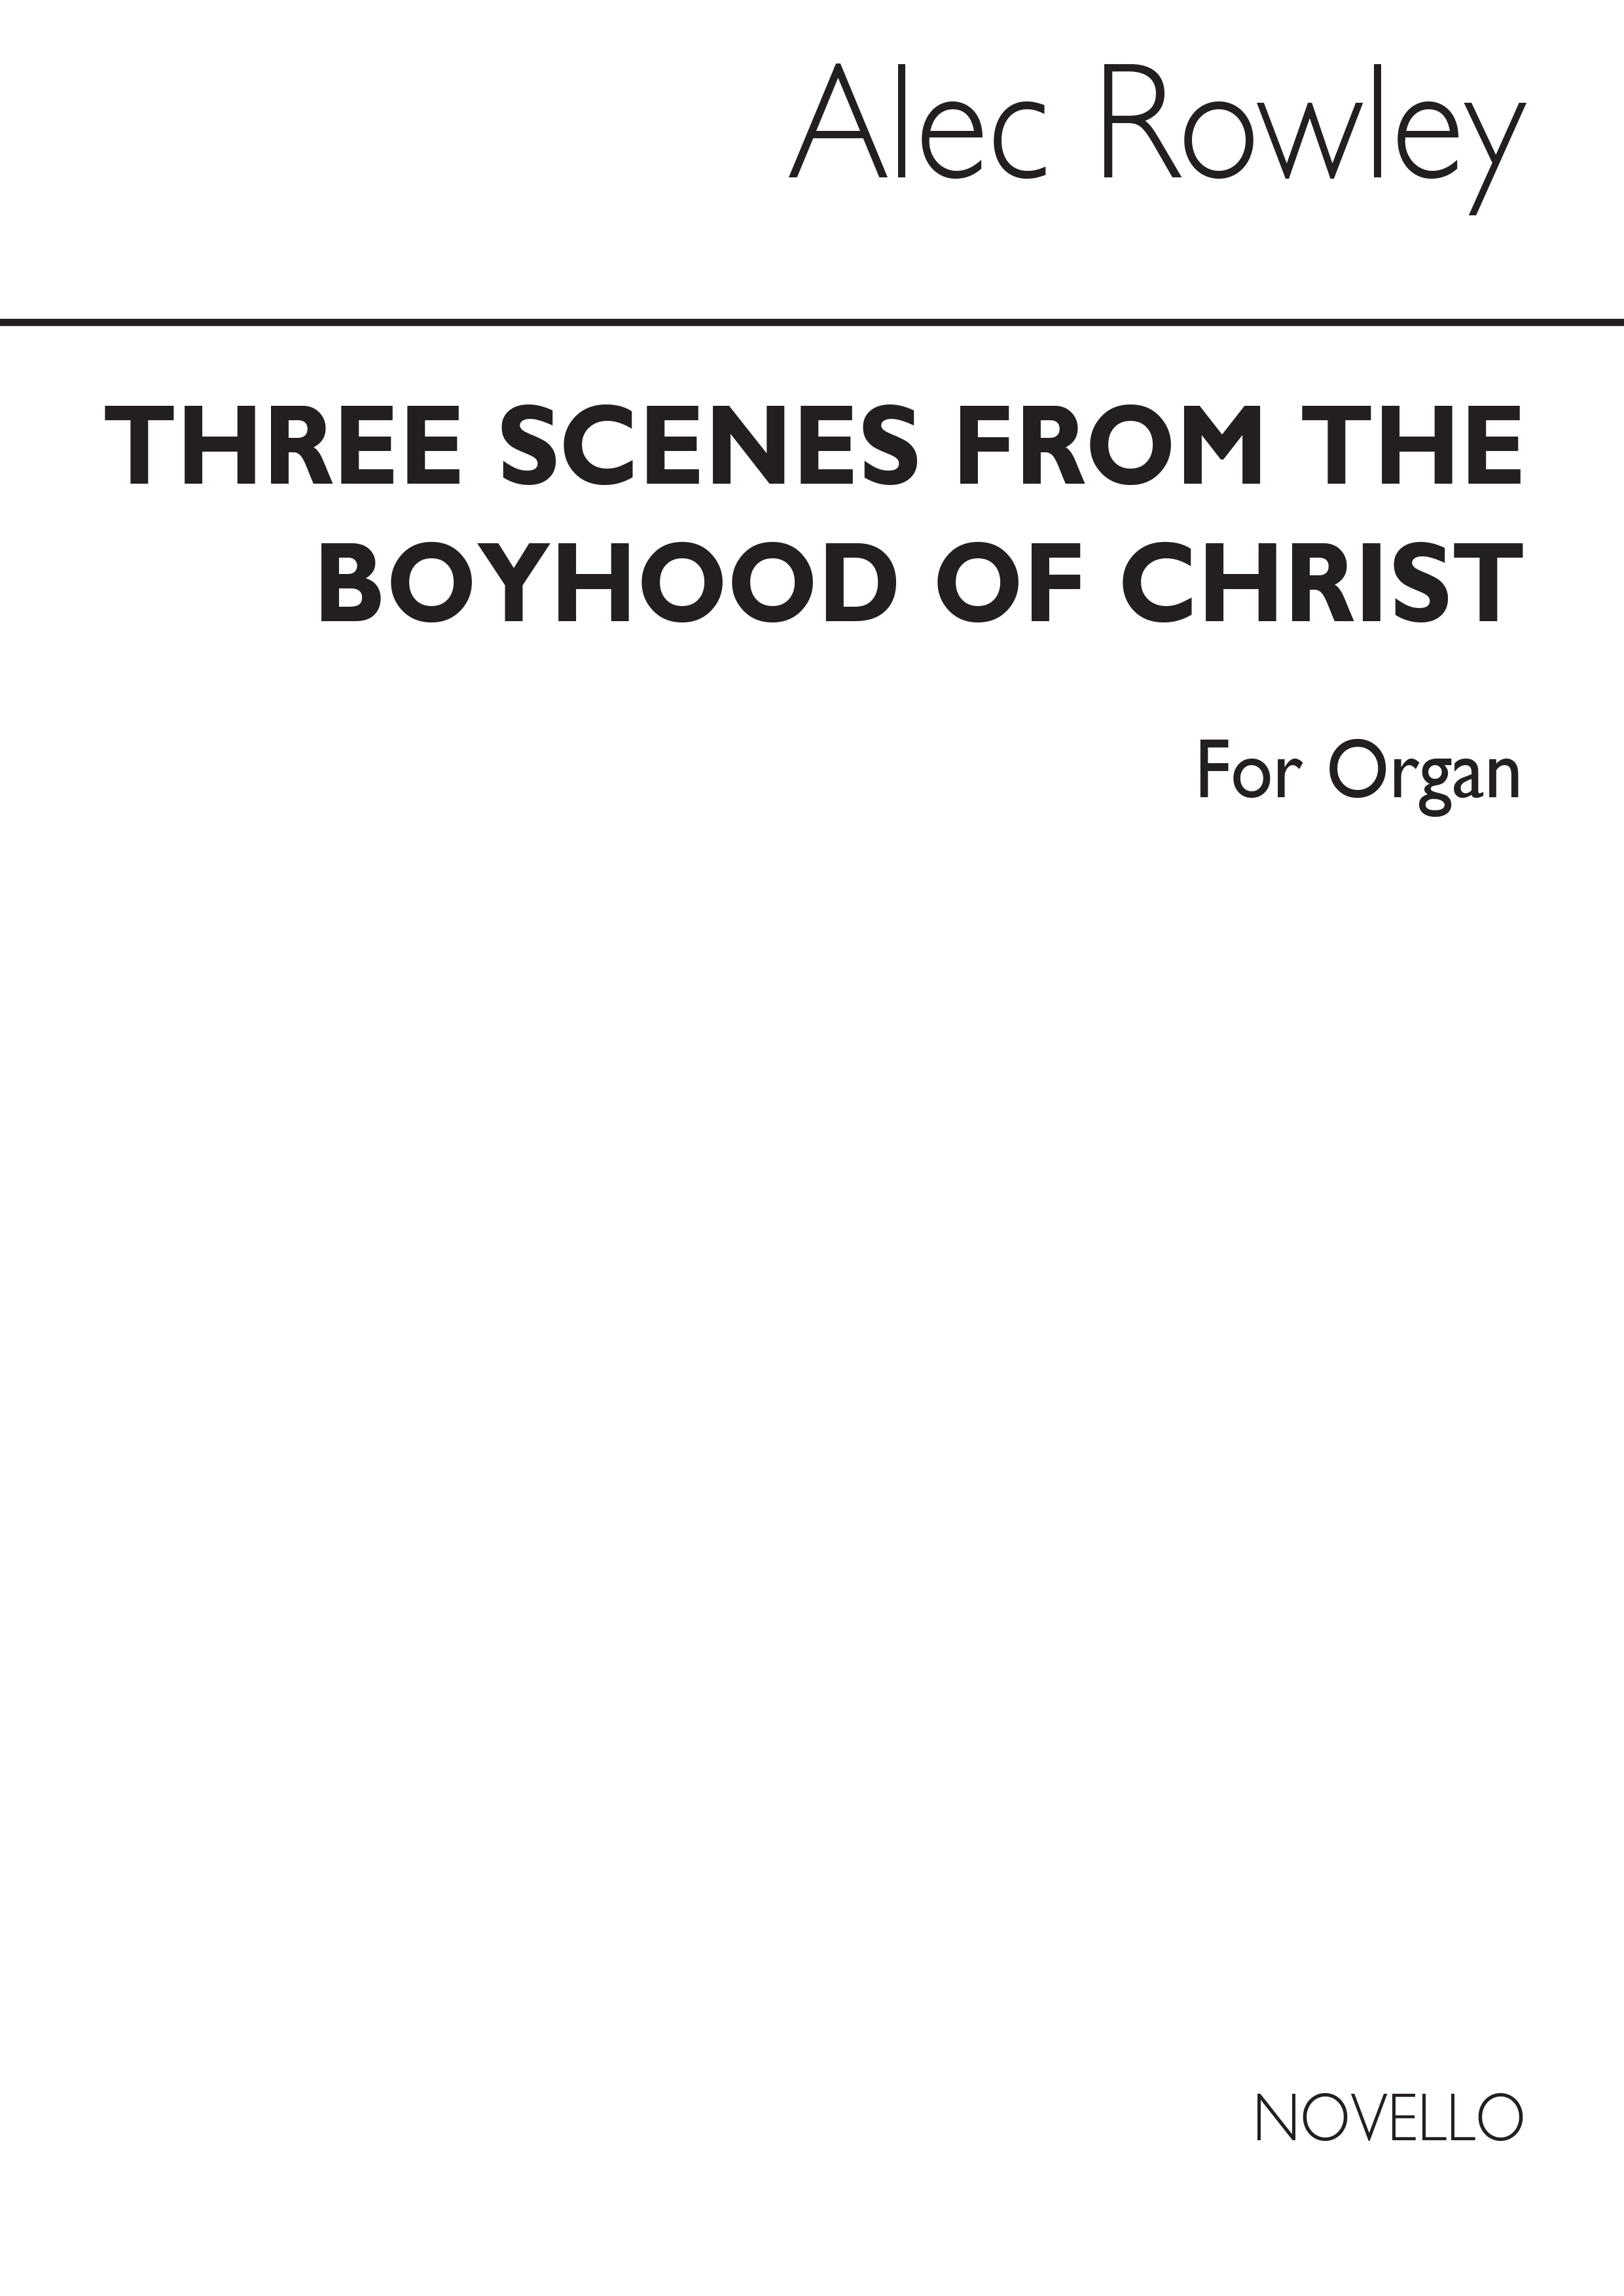 Rowley: Three Scenes From The Boyhood Of Christ for Organ